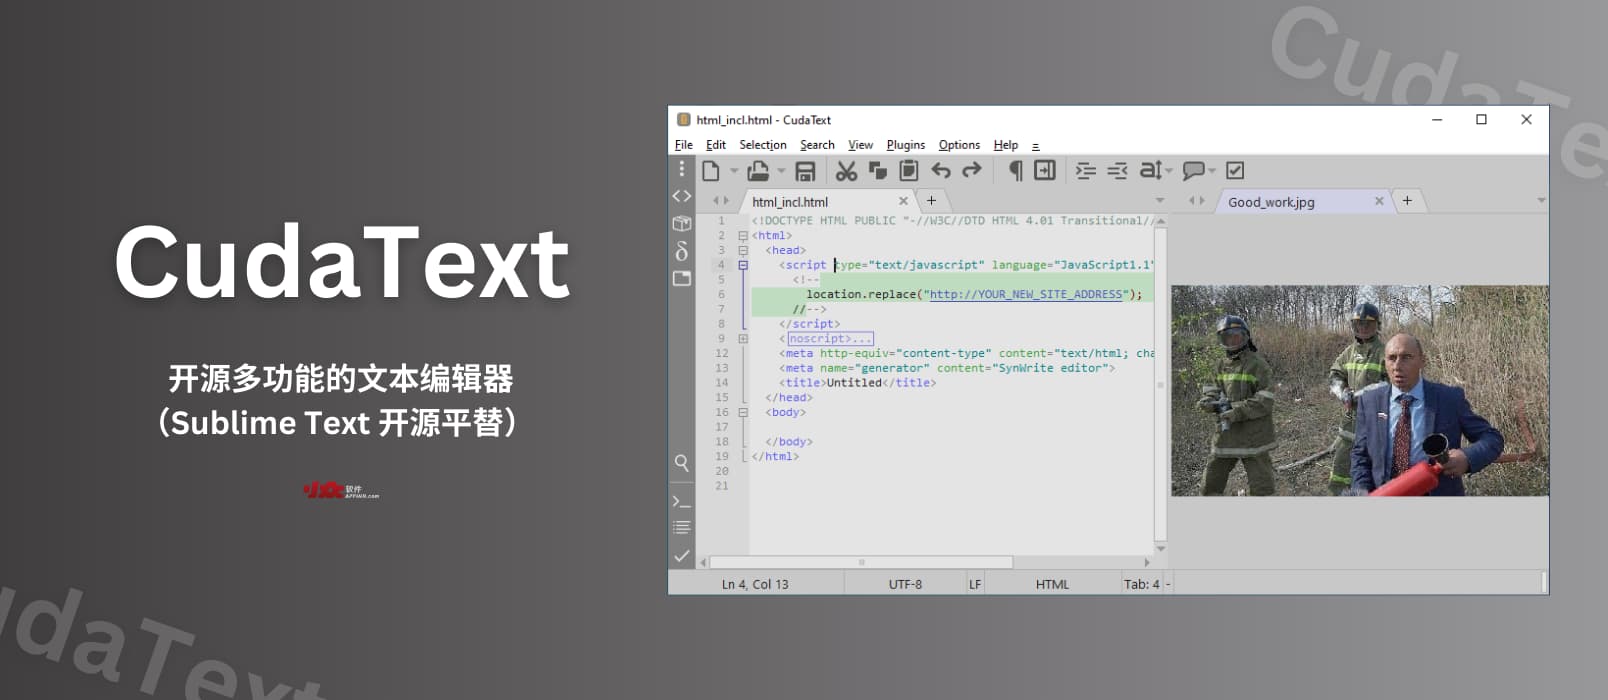 CudaText - 开源多功能的文本编辑器（Sublime Text 开源平替） 